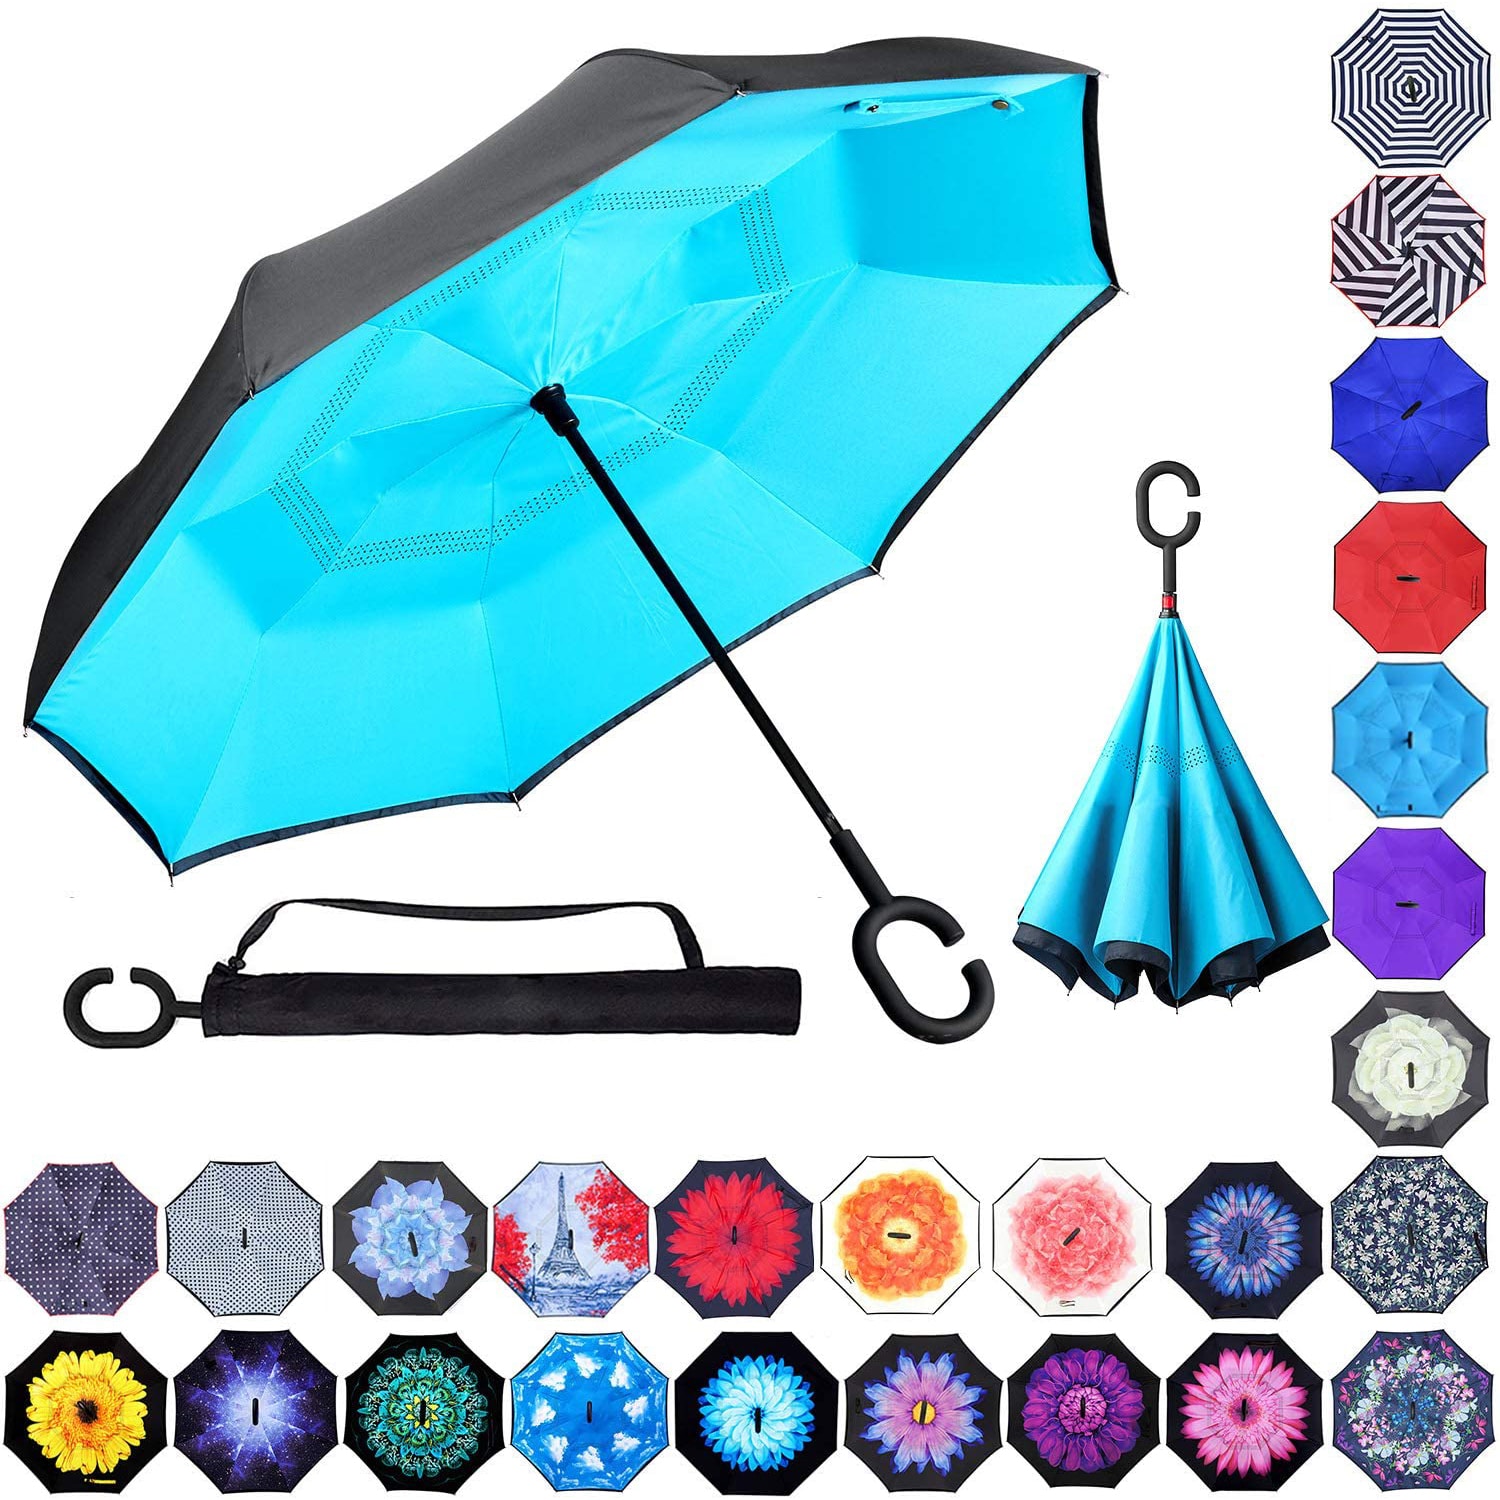 9. Zameka Double Layer Inverted Umbrellas 